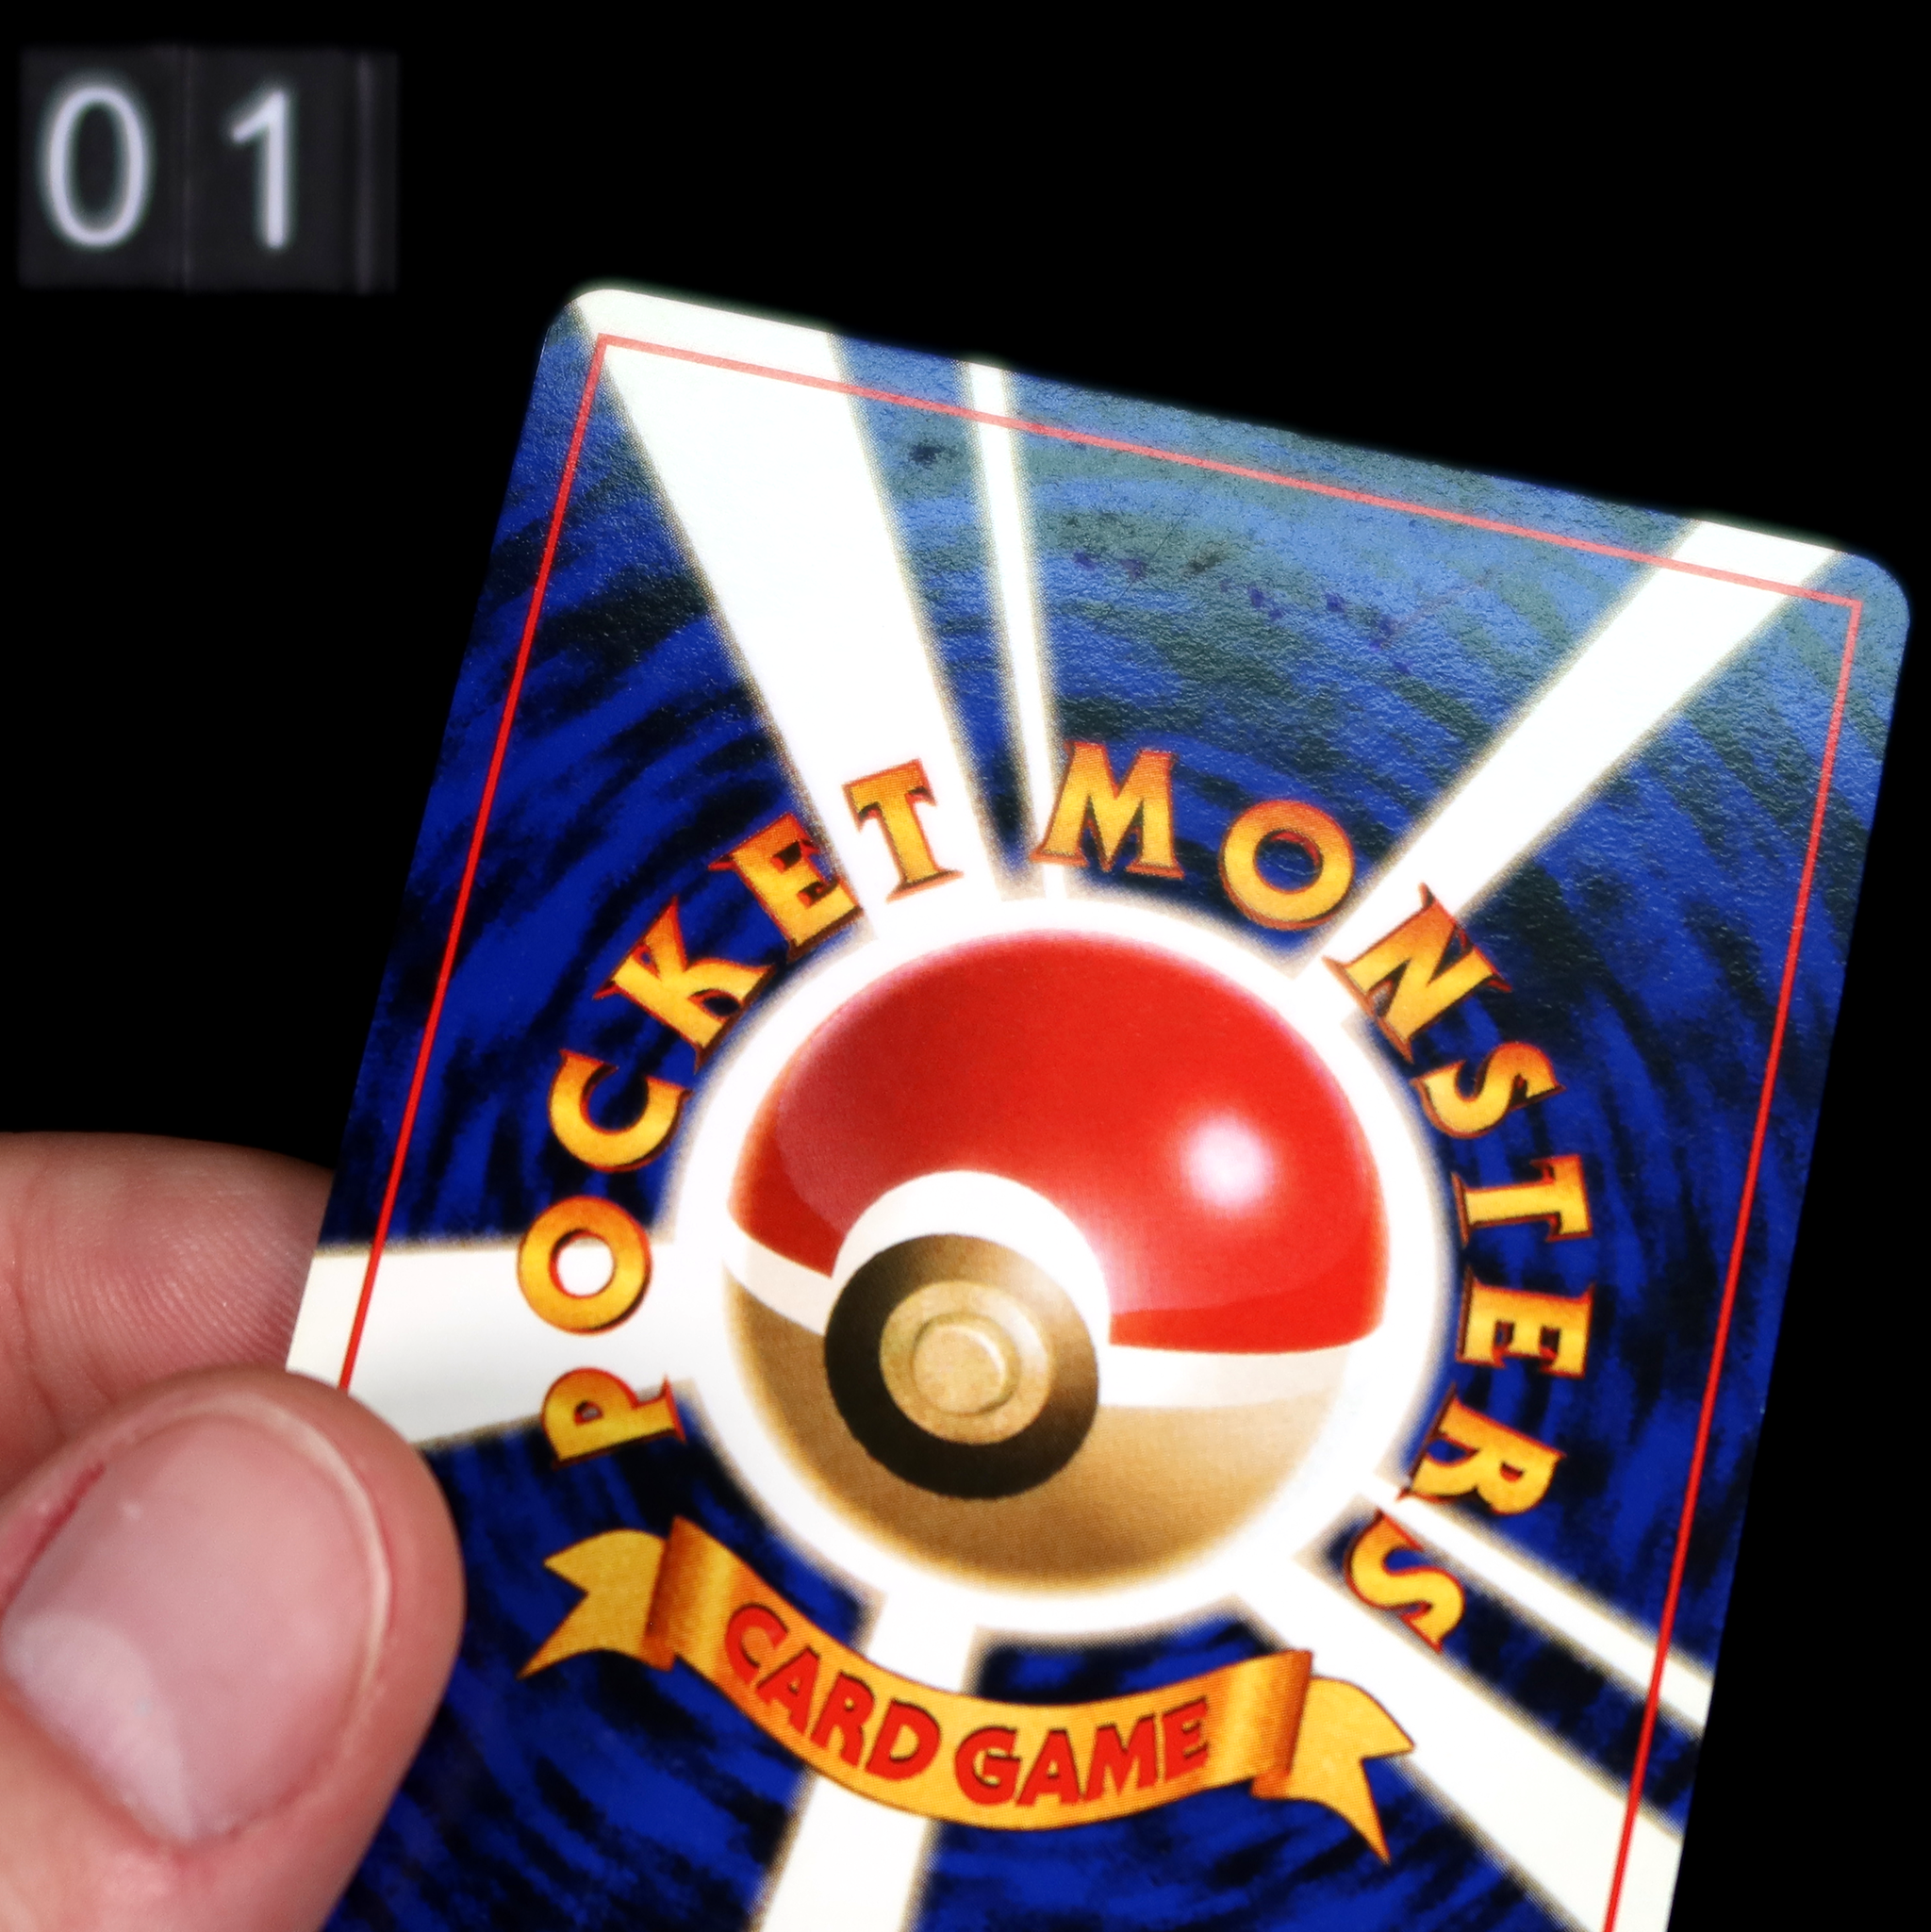 Pokémon Card Game No.094 Fossil - GENGAR